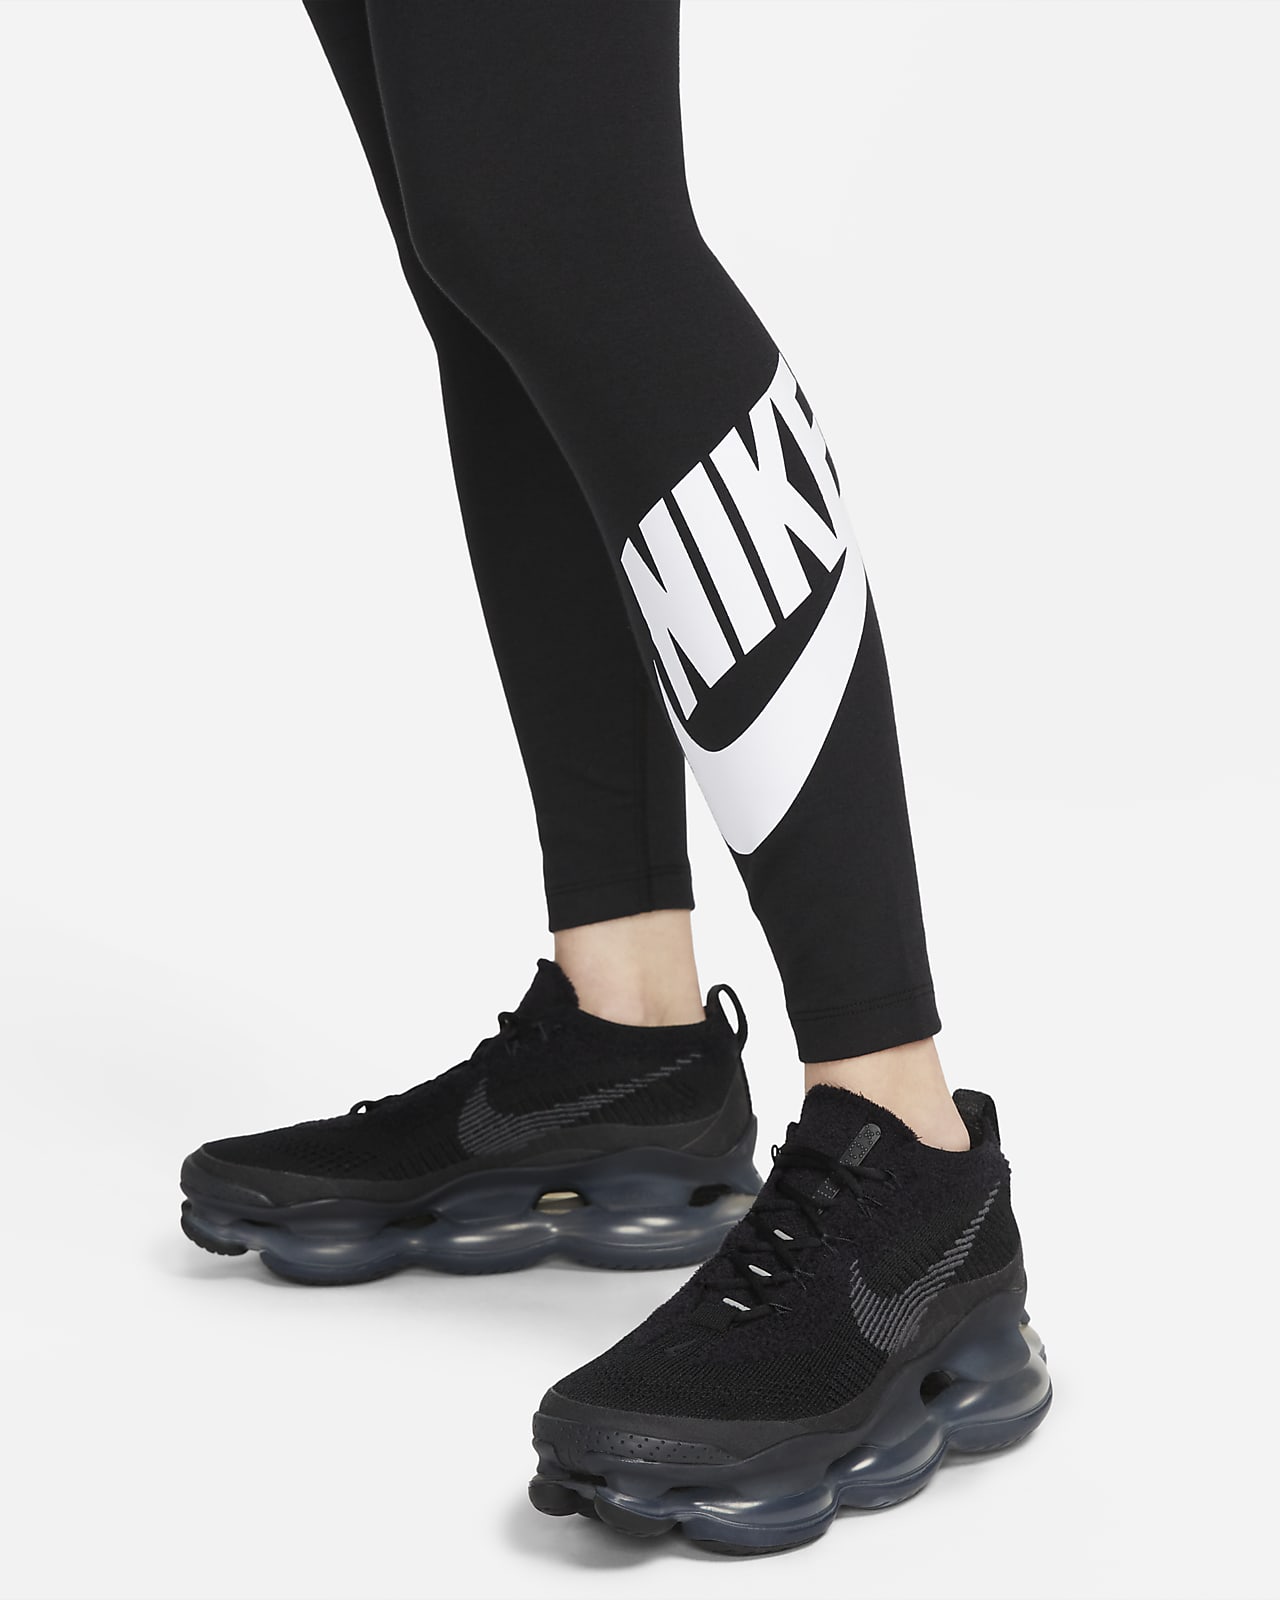 Legging Sportswear Classics Preta - Nike - Casa do Tenista